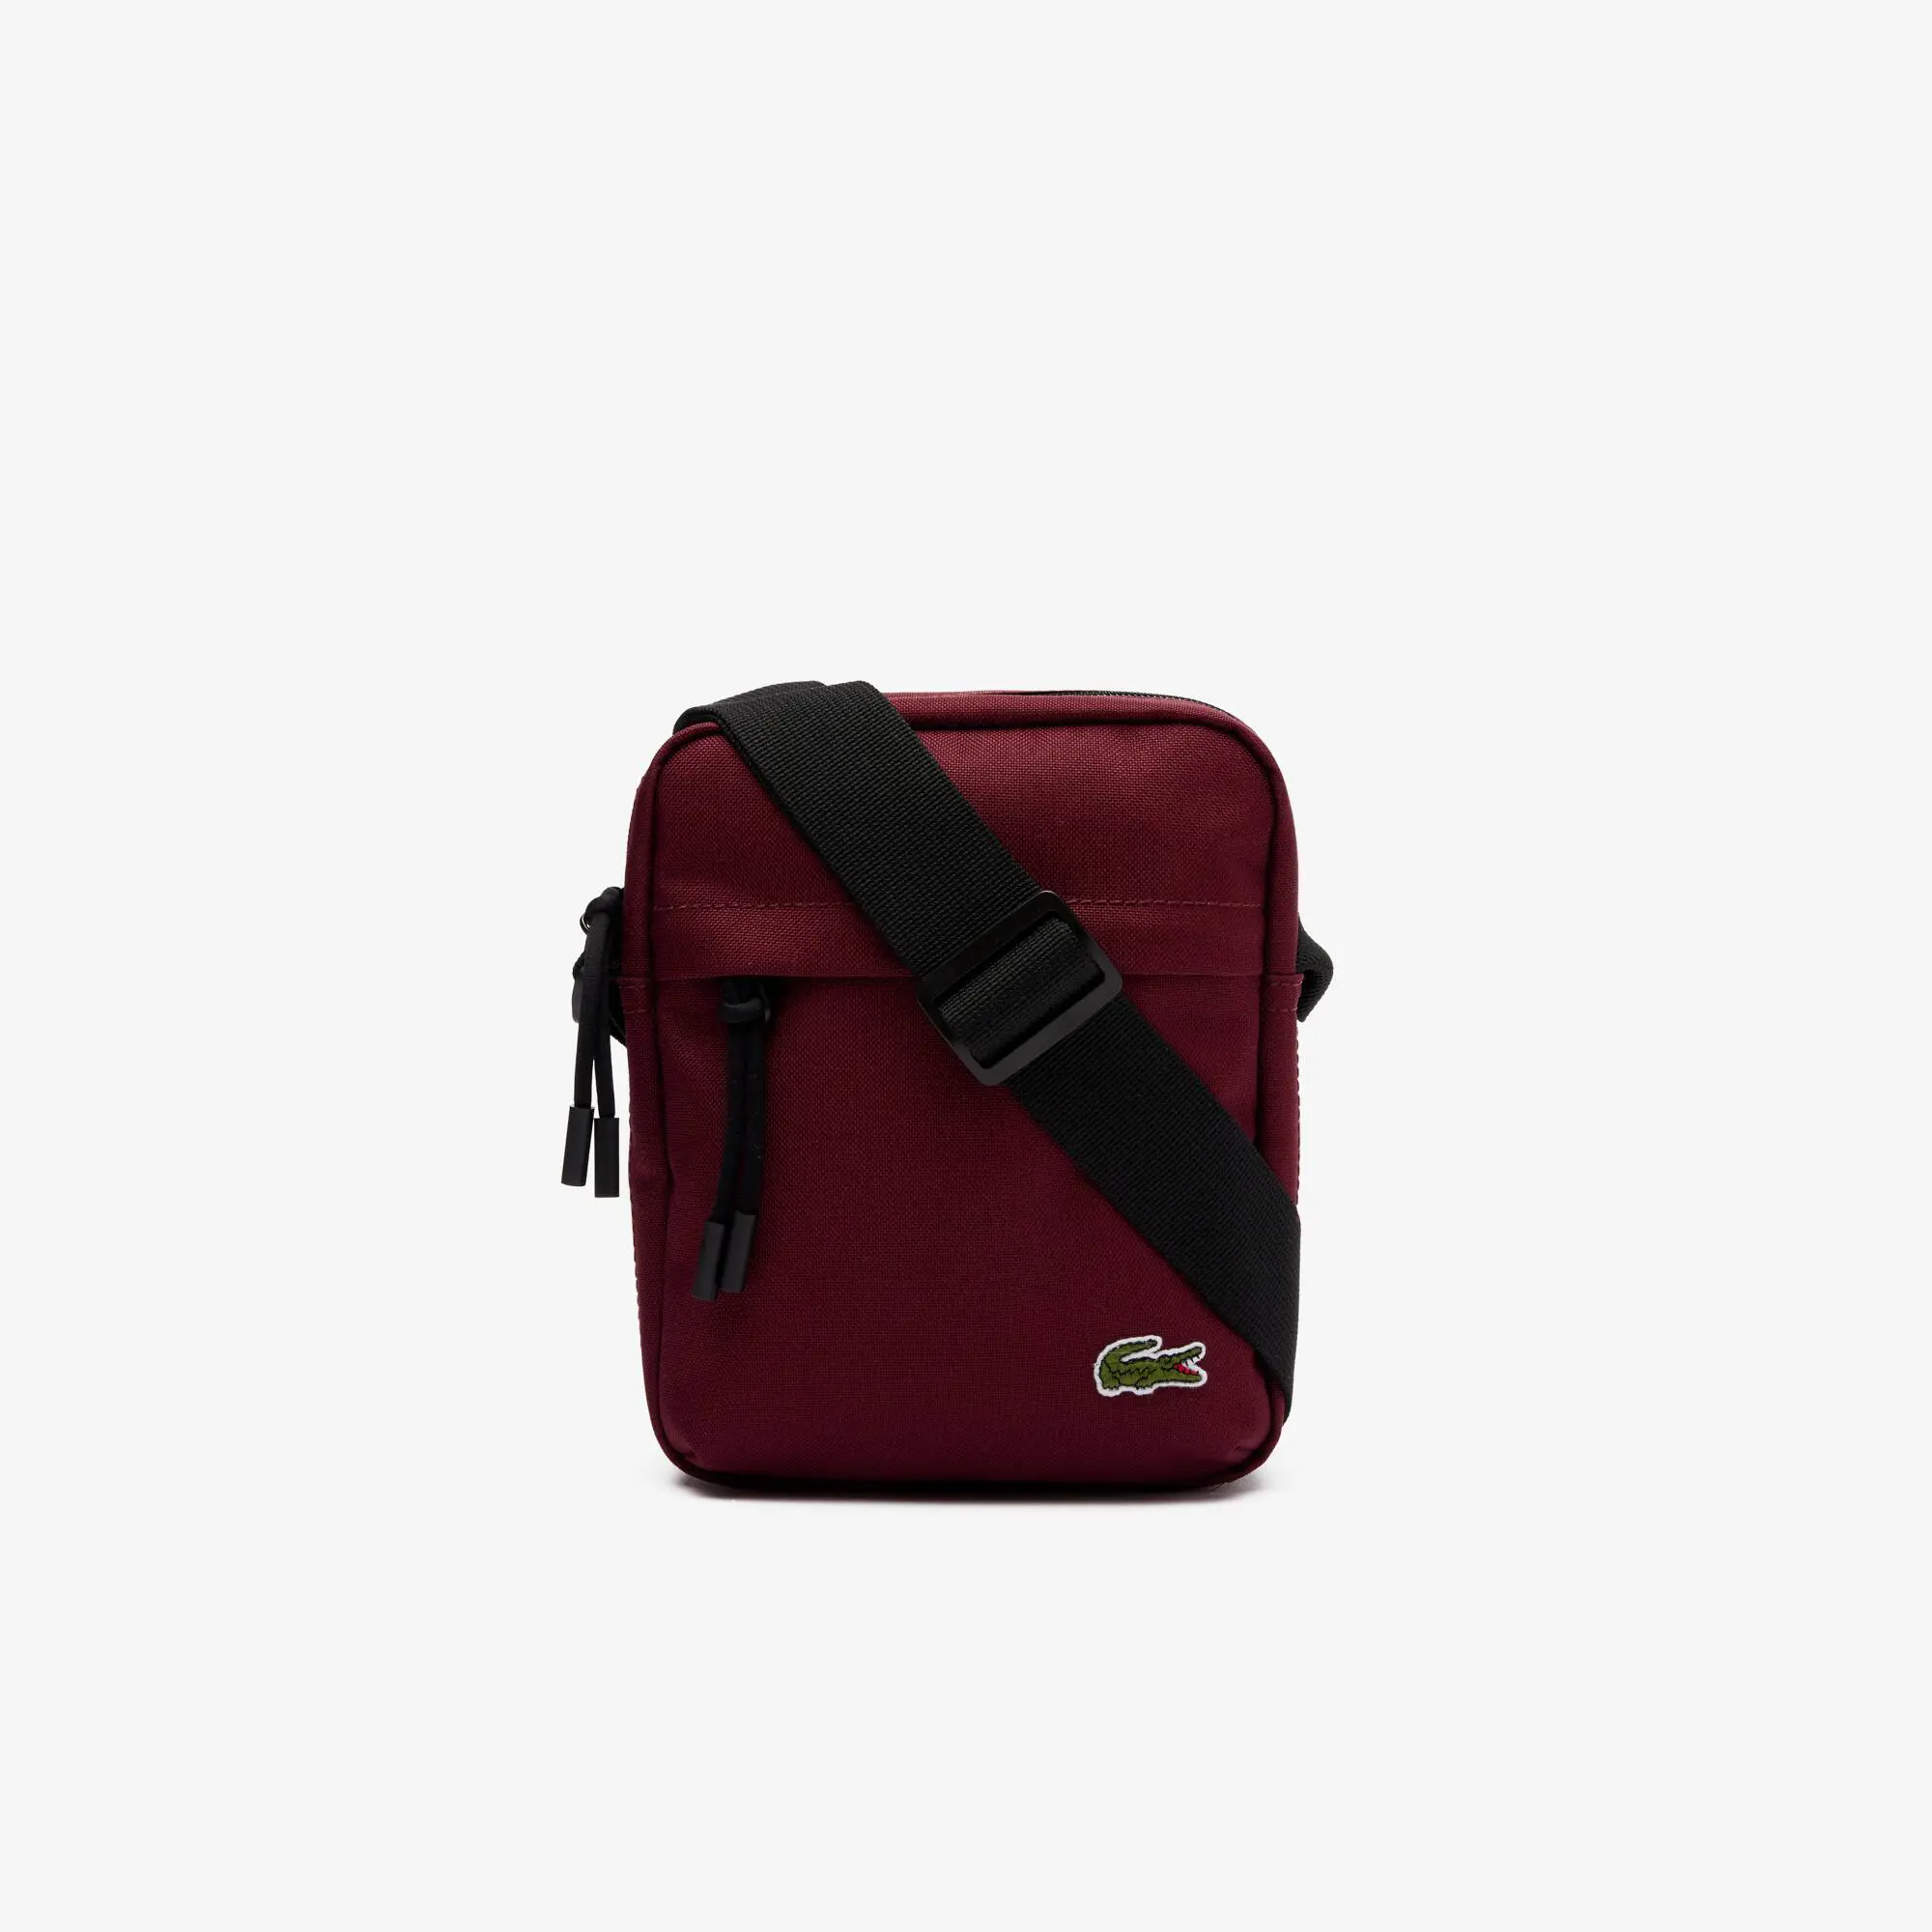 Lacoste Unisex Lacoste Zip Crossover Bag. 1